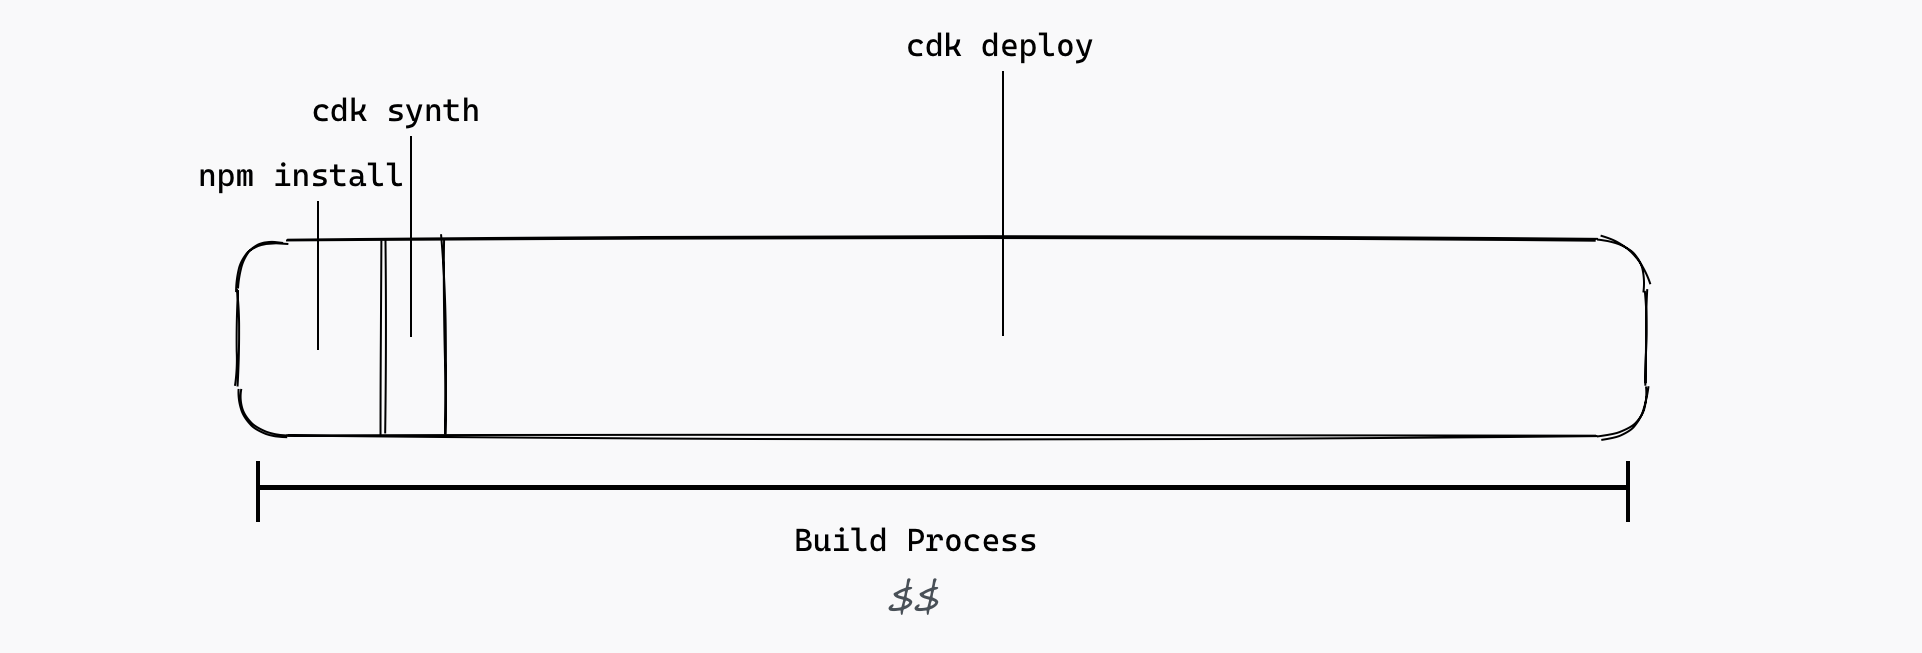 CDK deployment lifecycle